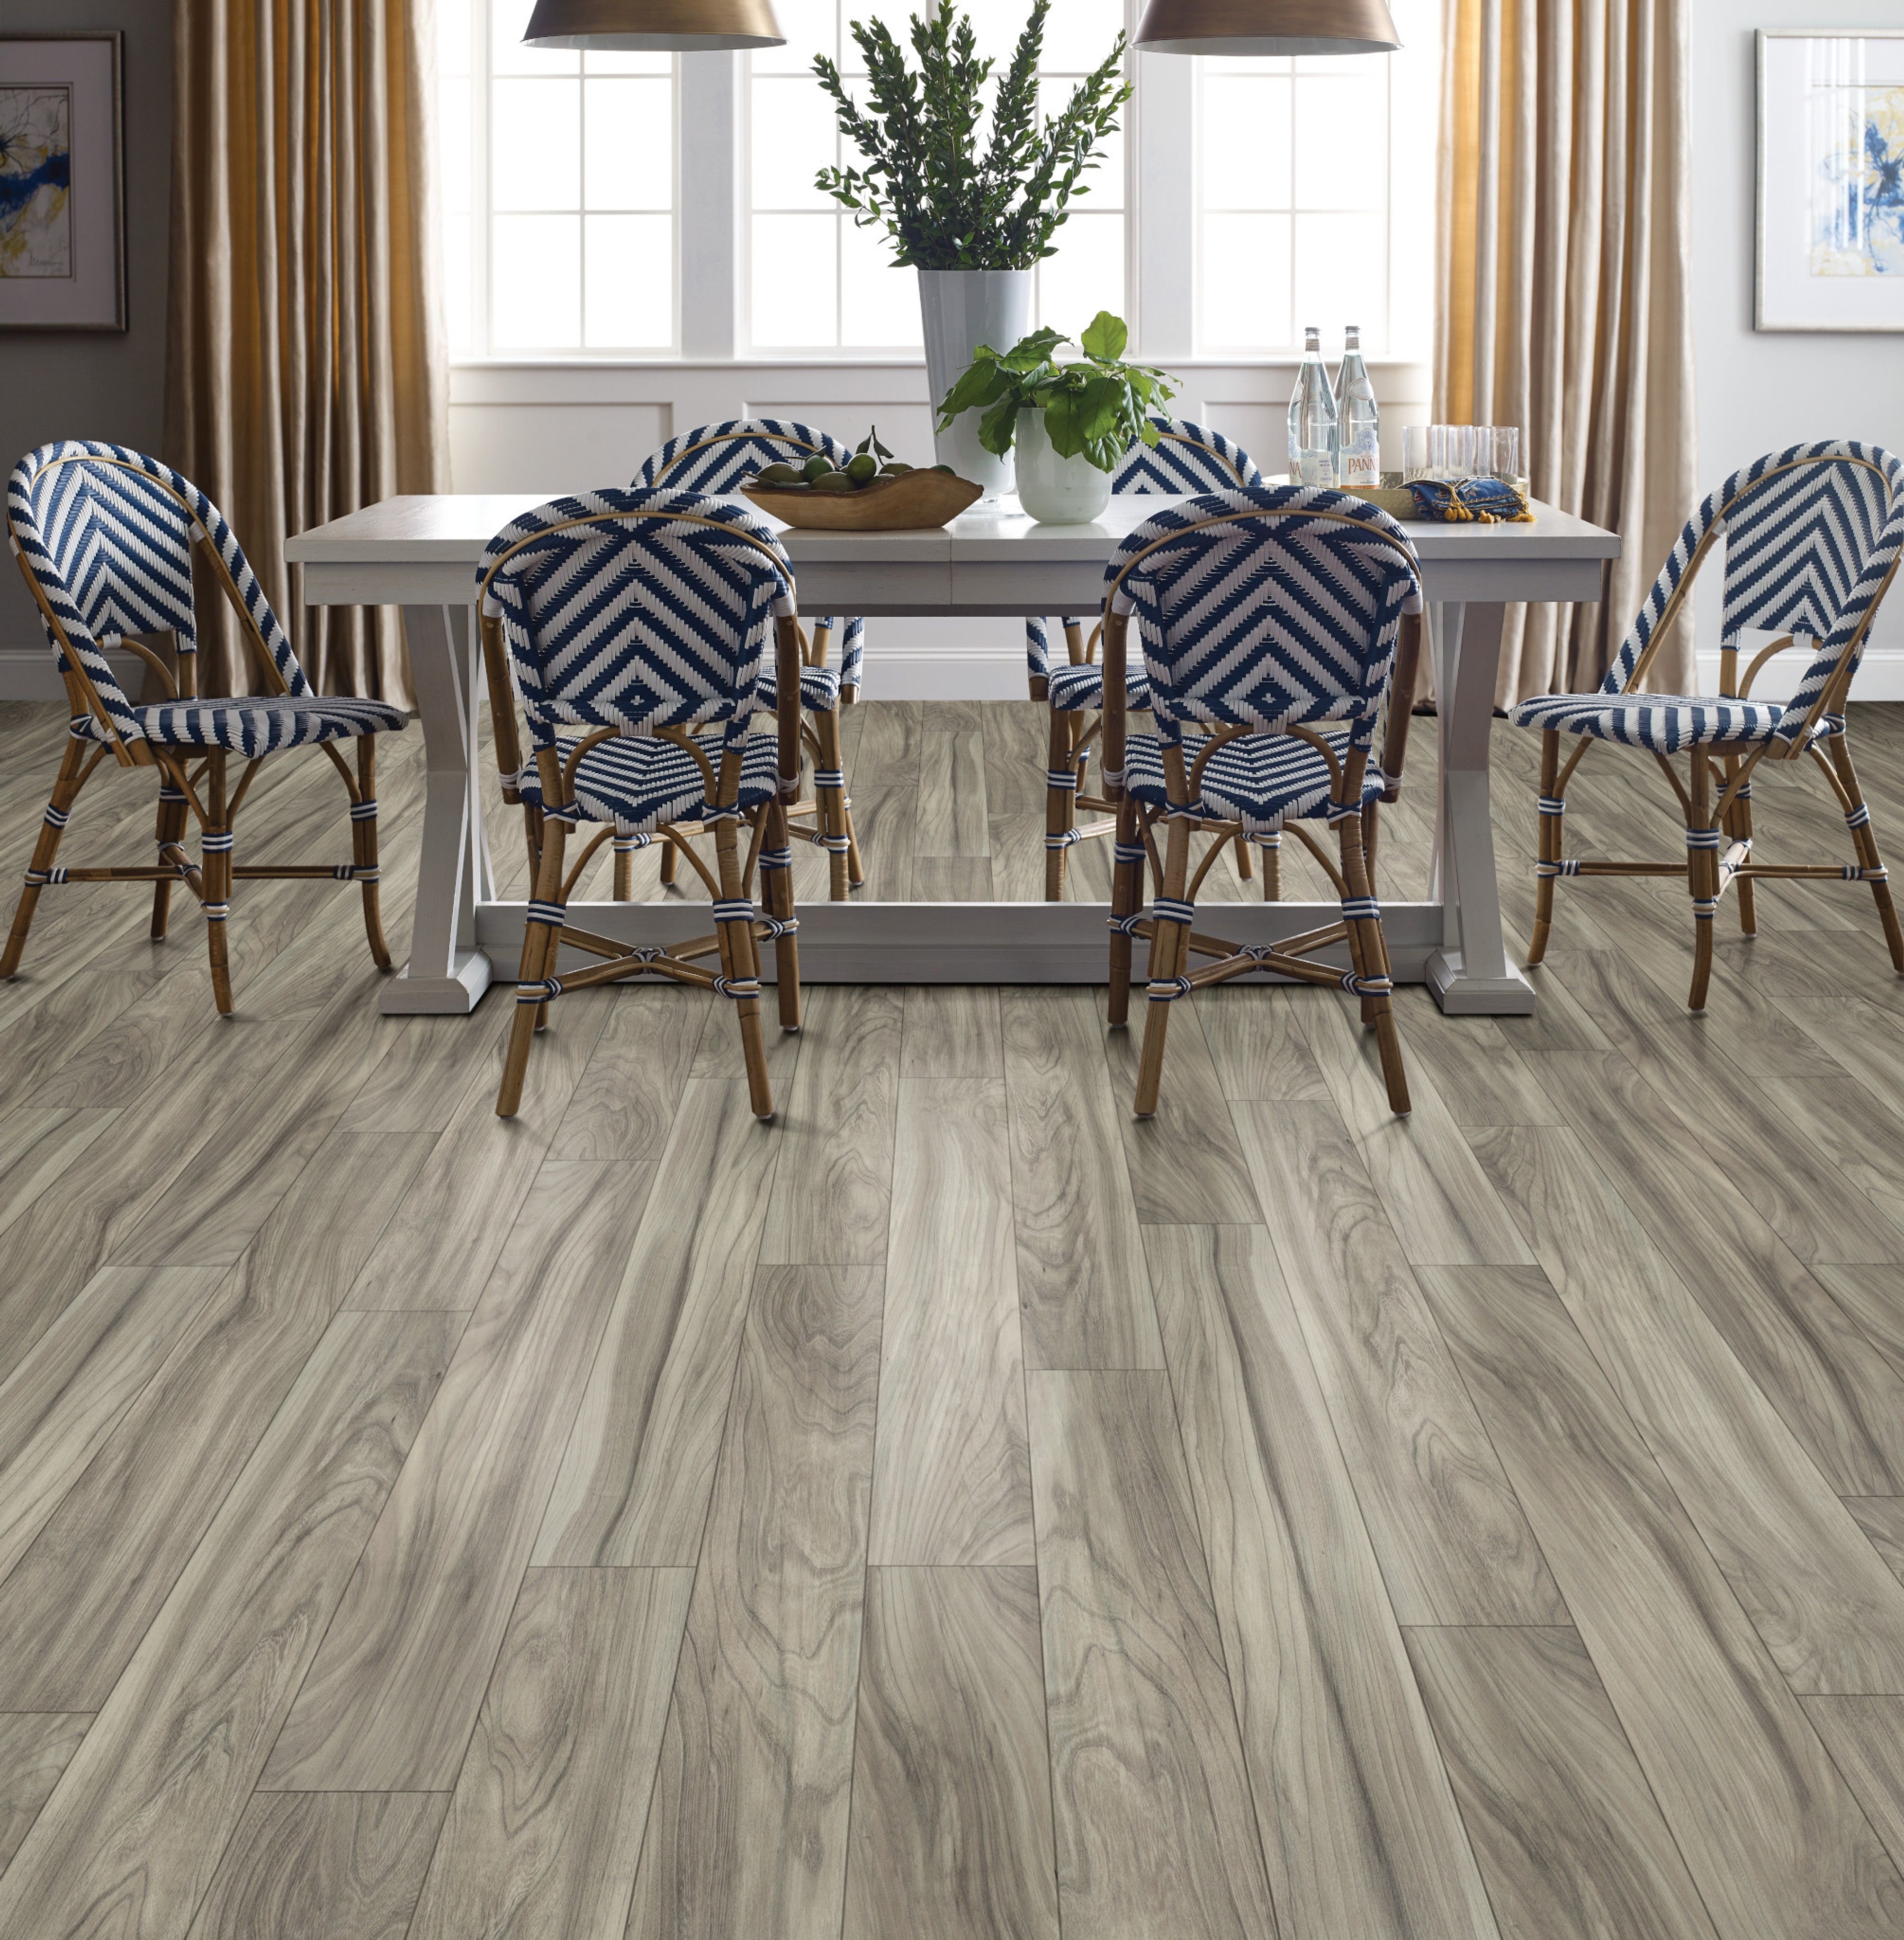 Dining room with wood-look laminate flooring from Carpet Sudio & Design Inc. in Los Angeles, CA